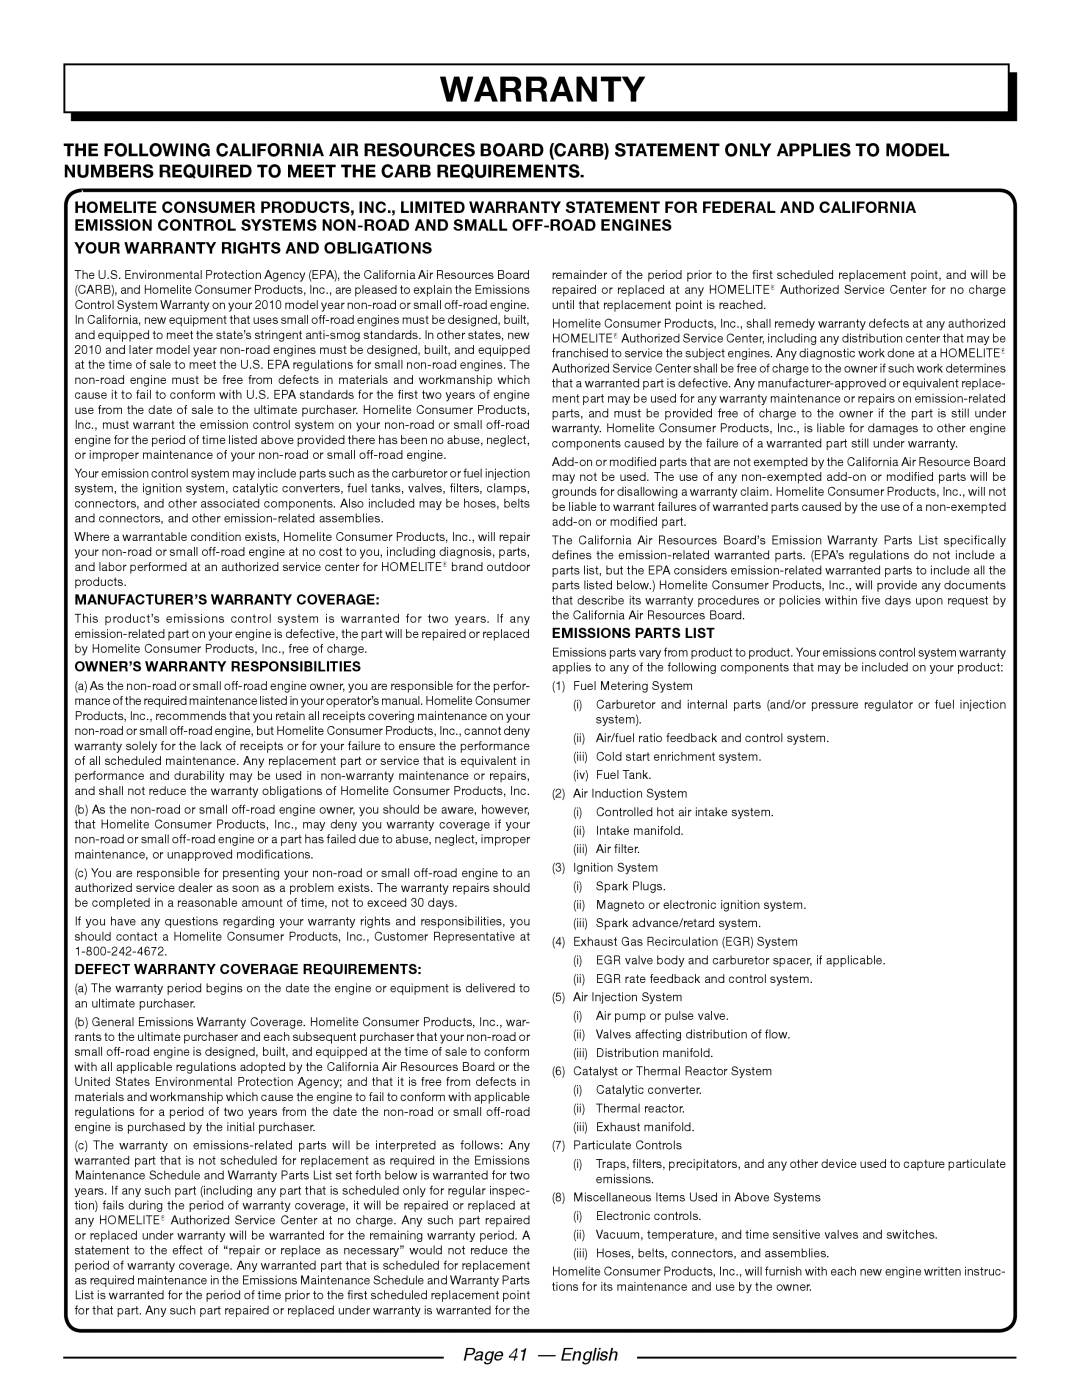 Homelite UT10566 Warrantyranty, Page 41 - English, Manufacturer’S Warranty Coverage, Owner’S Warranty Responsibilities 